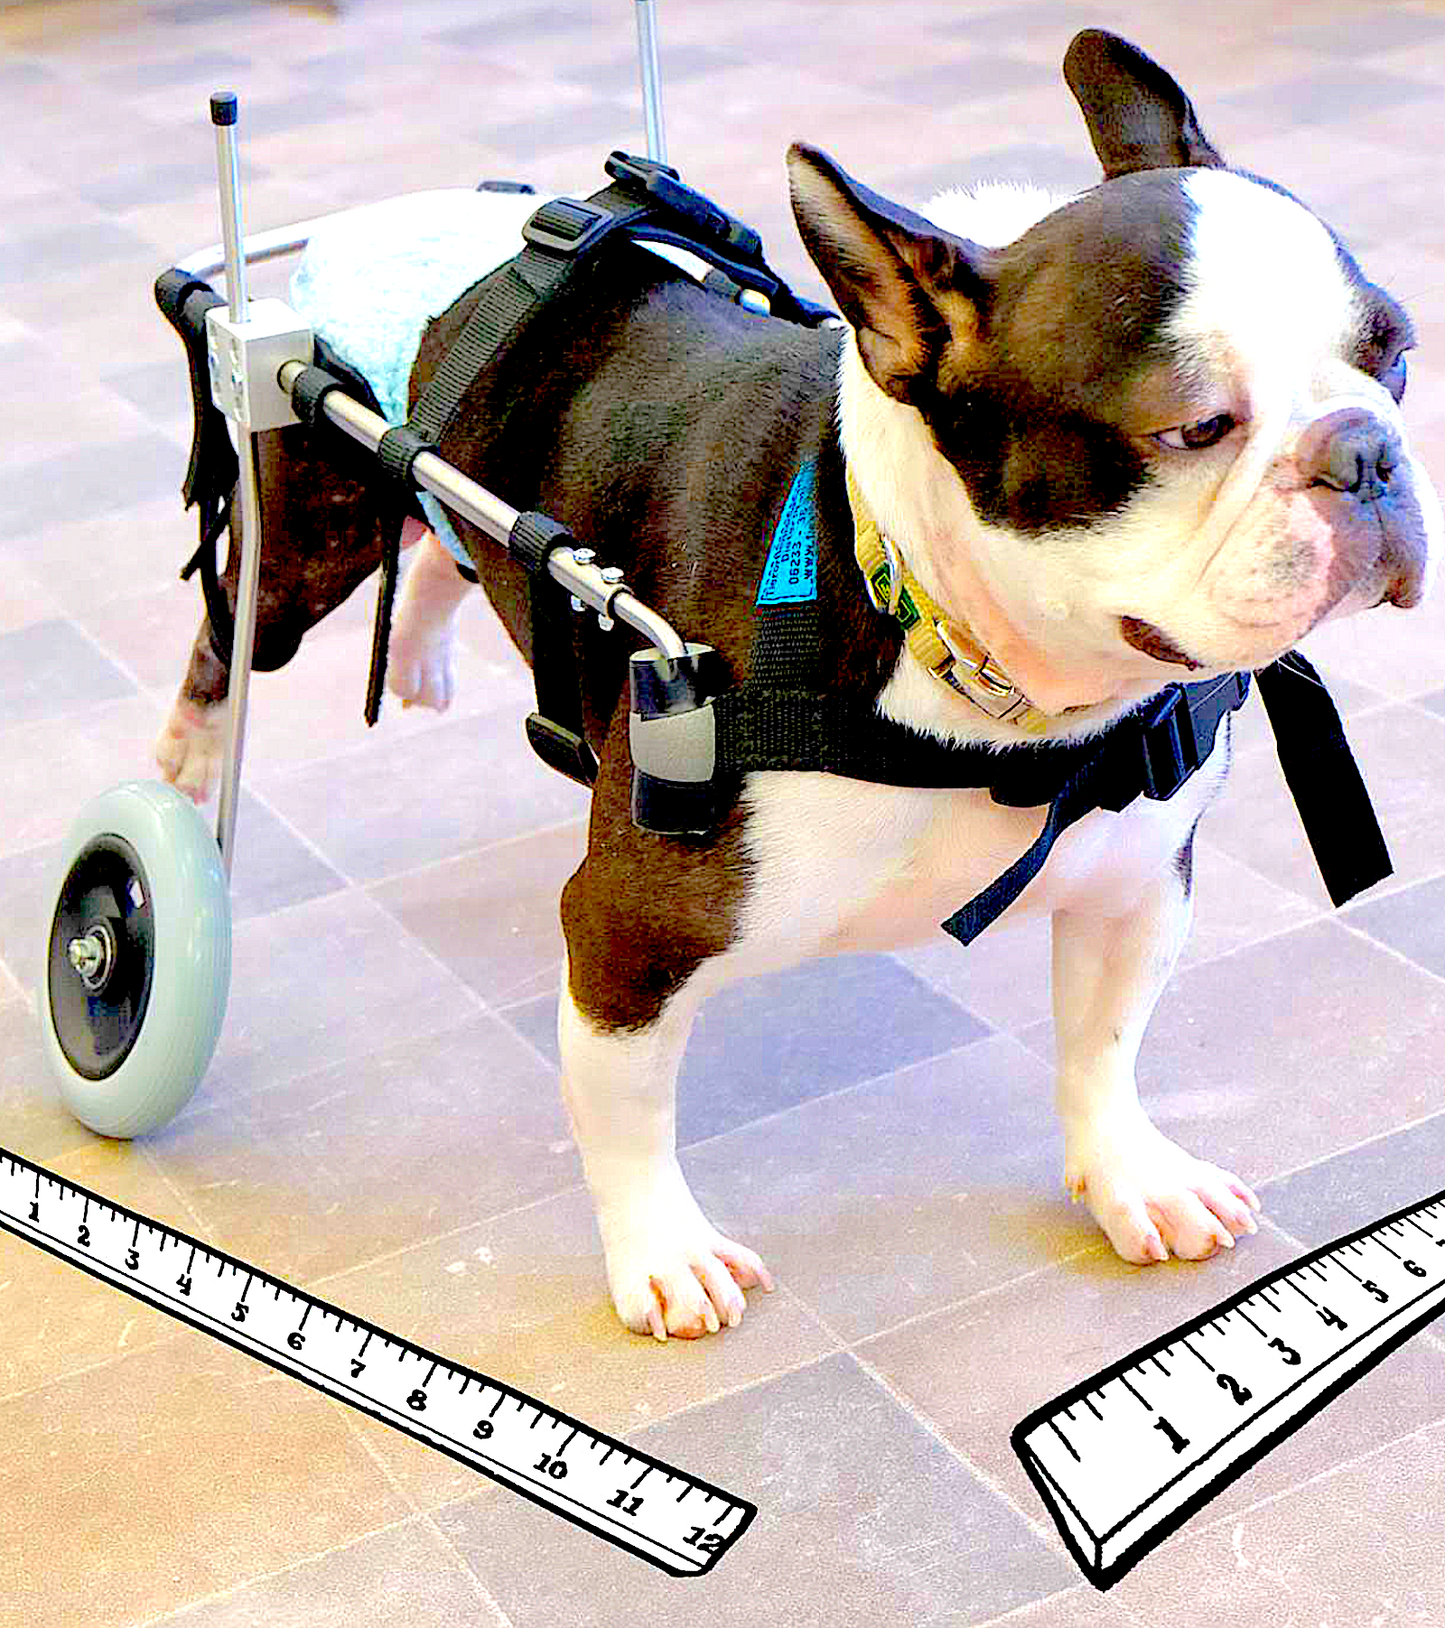 PFAFF ROLLWAGEN-GERMANY: the next generation of wheelchairs for dogs - Vital Vet